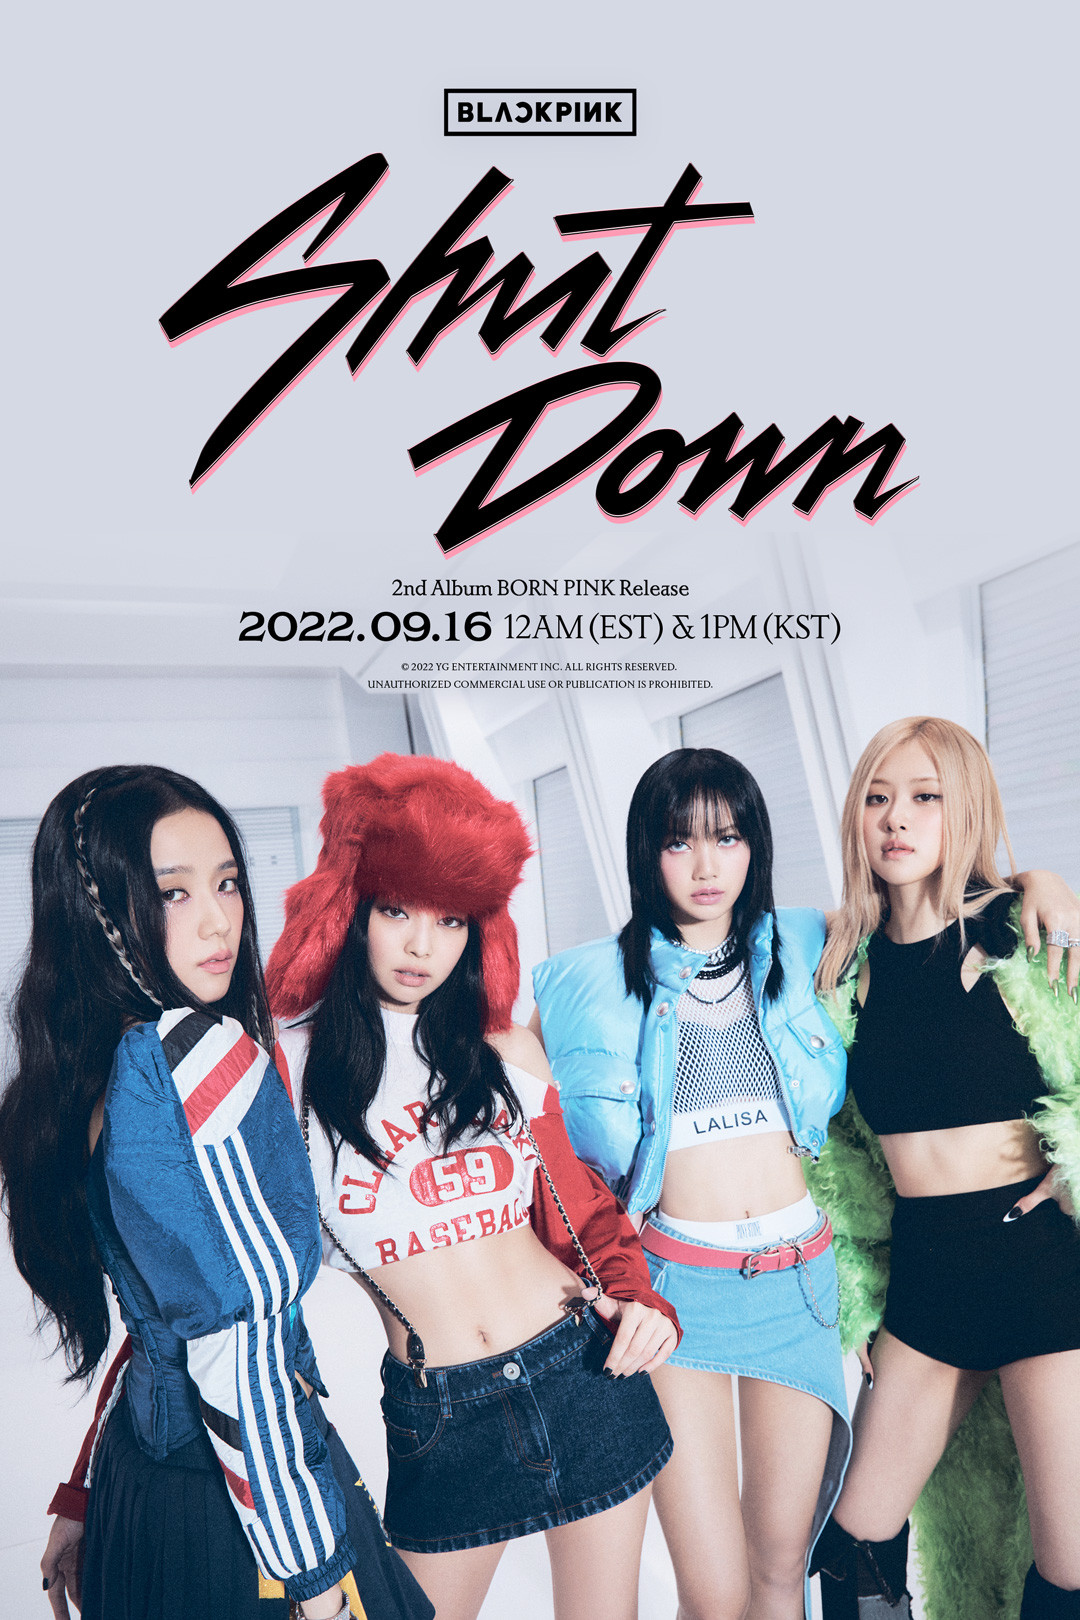 Update: BLACKPINK Drops 1st Group Teaser For New Title Track “Shut Down” |  Soompi